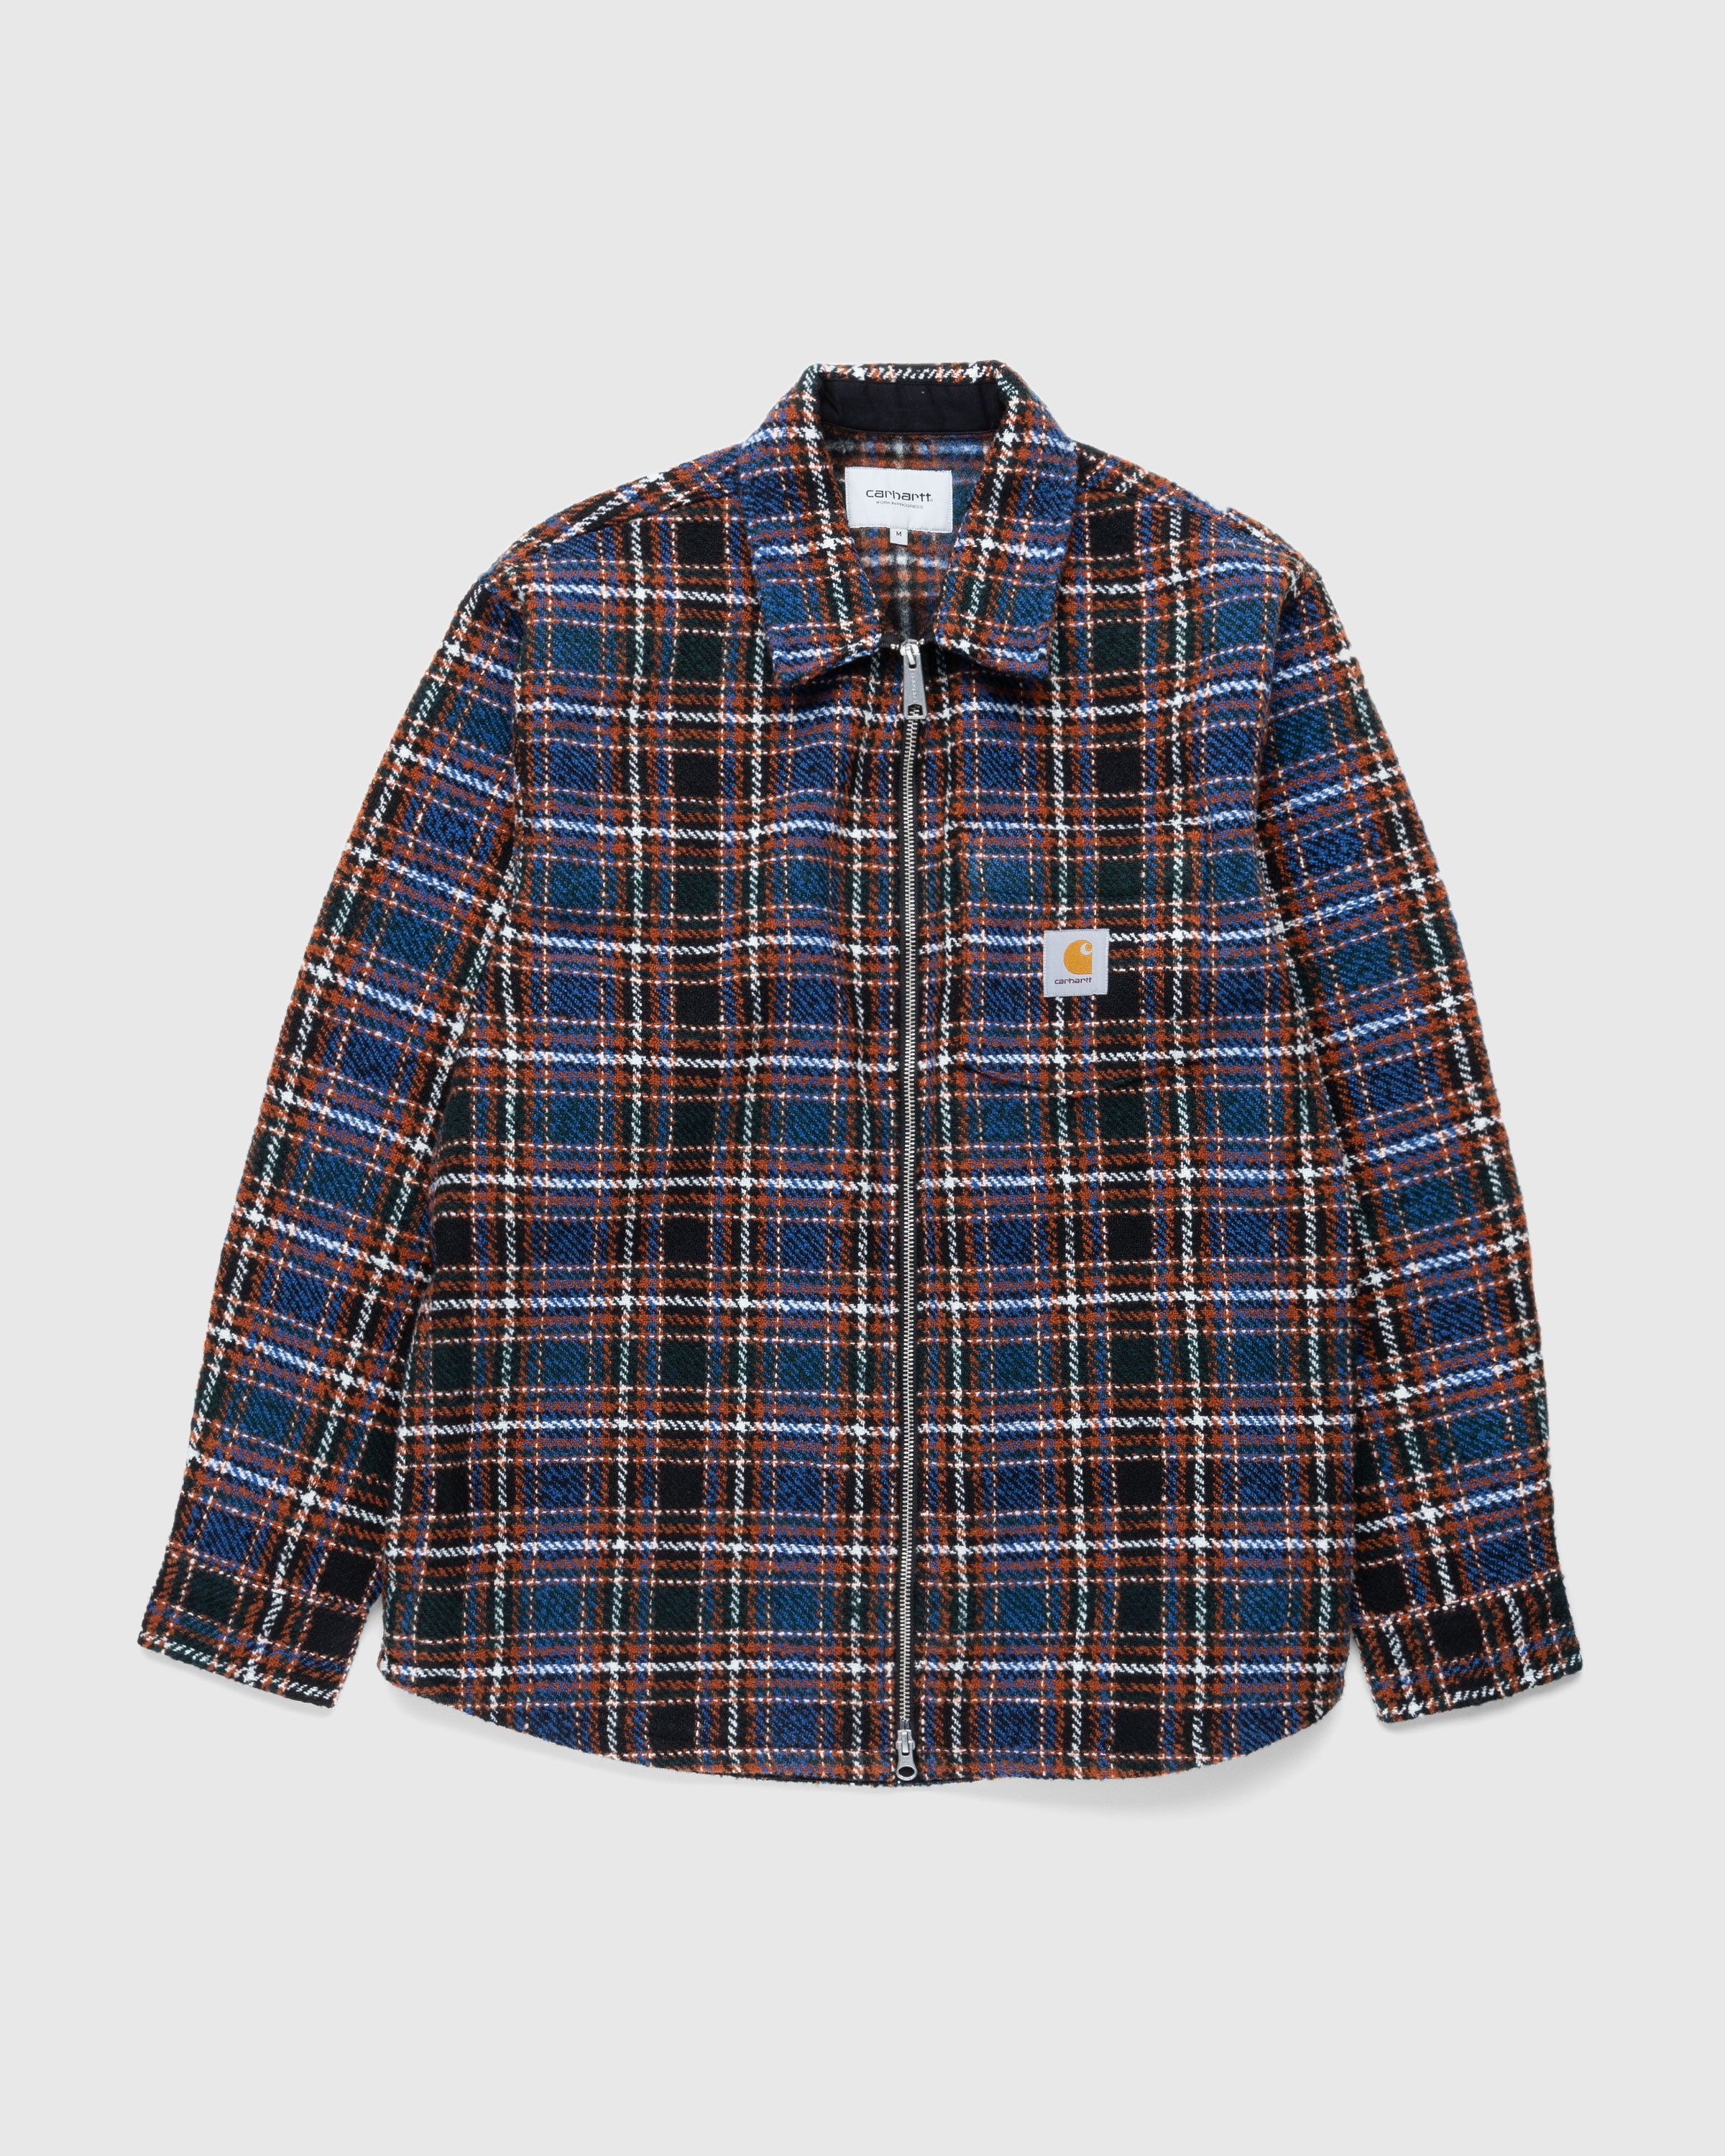 Carhartt WIP - Stroy Check Shirt Jacket Multi - Clothing - Multi - Image 1